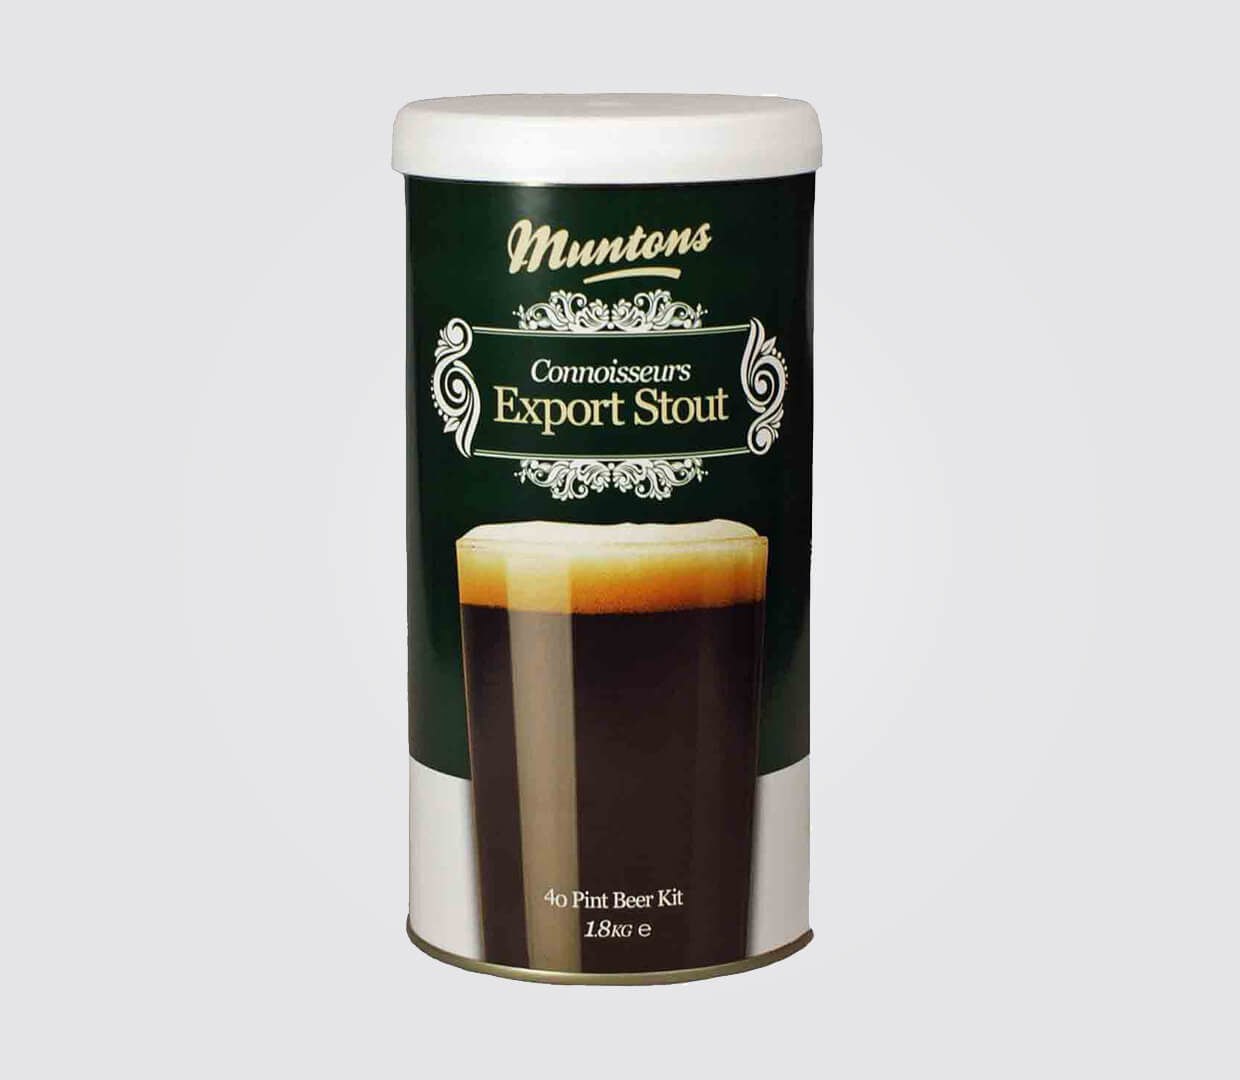 Muntons Connoisseurs Range Export Stout 1.8kg - All Things Fermented | Home Brew Shop NZ | Supplies | Equipment